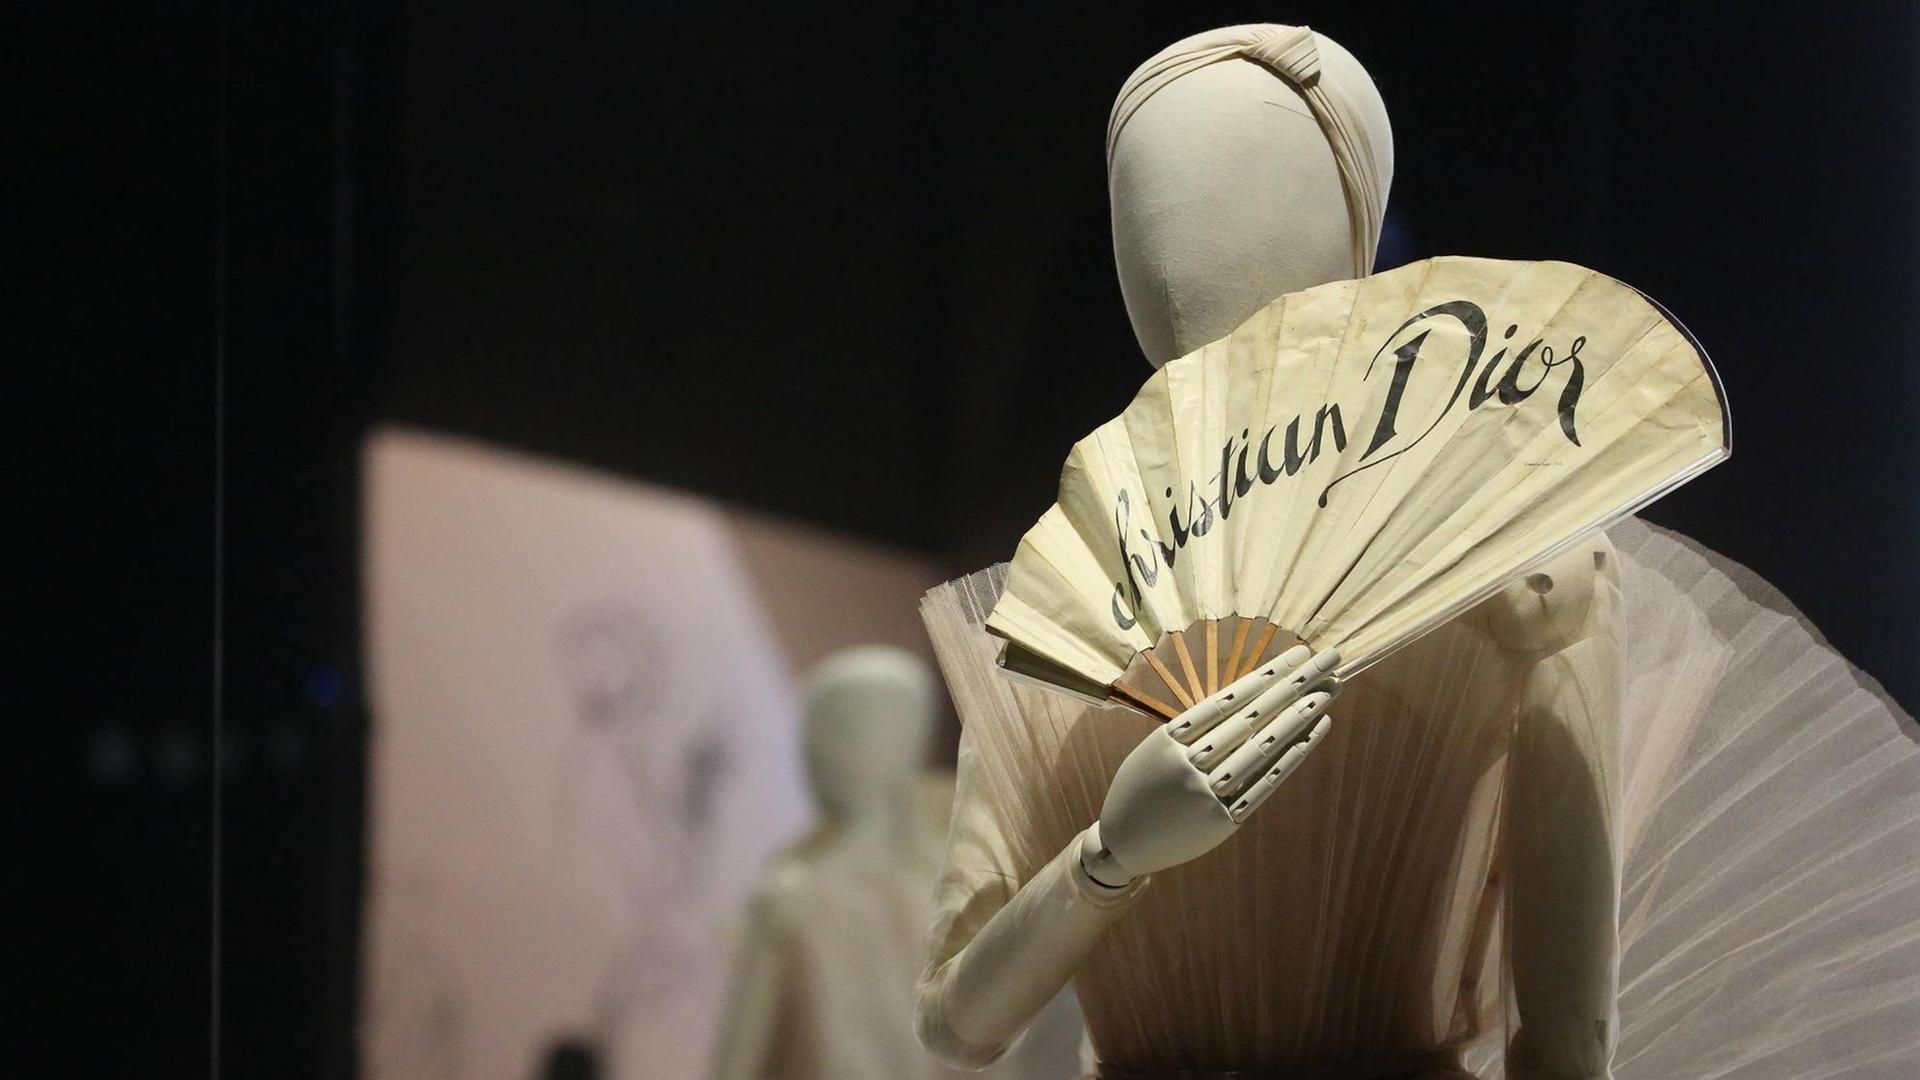 Dior Ausstellung im Londoner Victoria & Albert Museum, London 2019